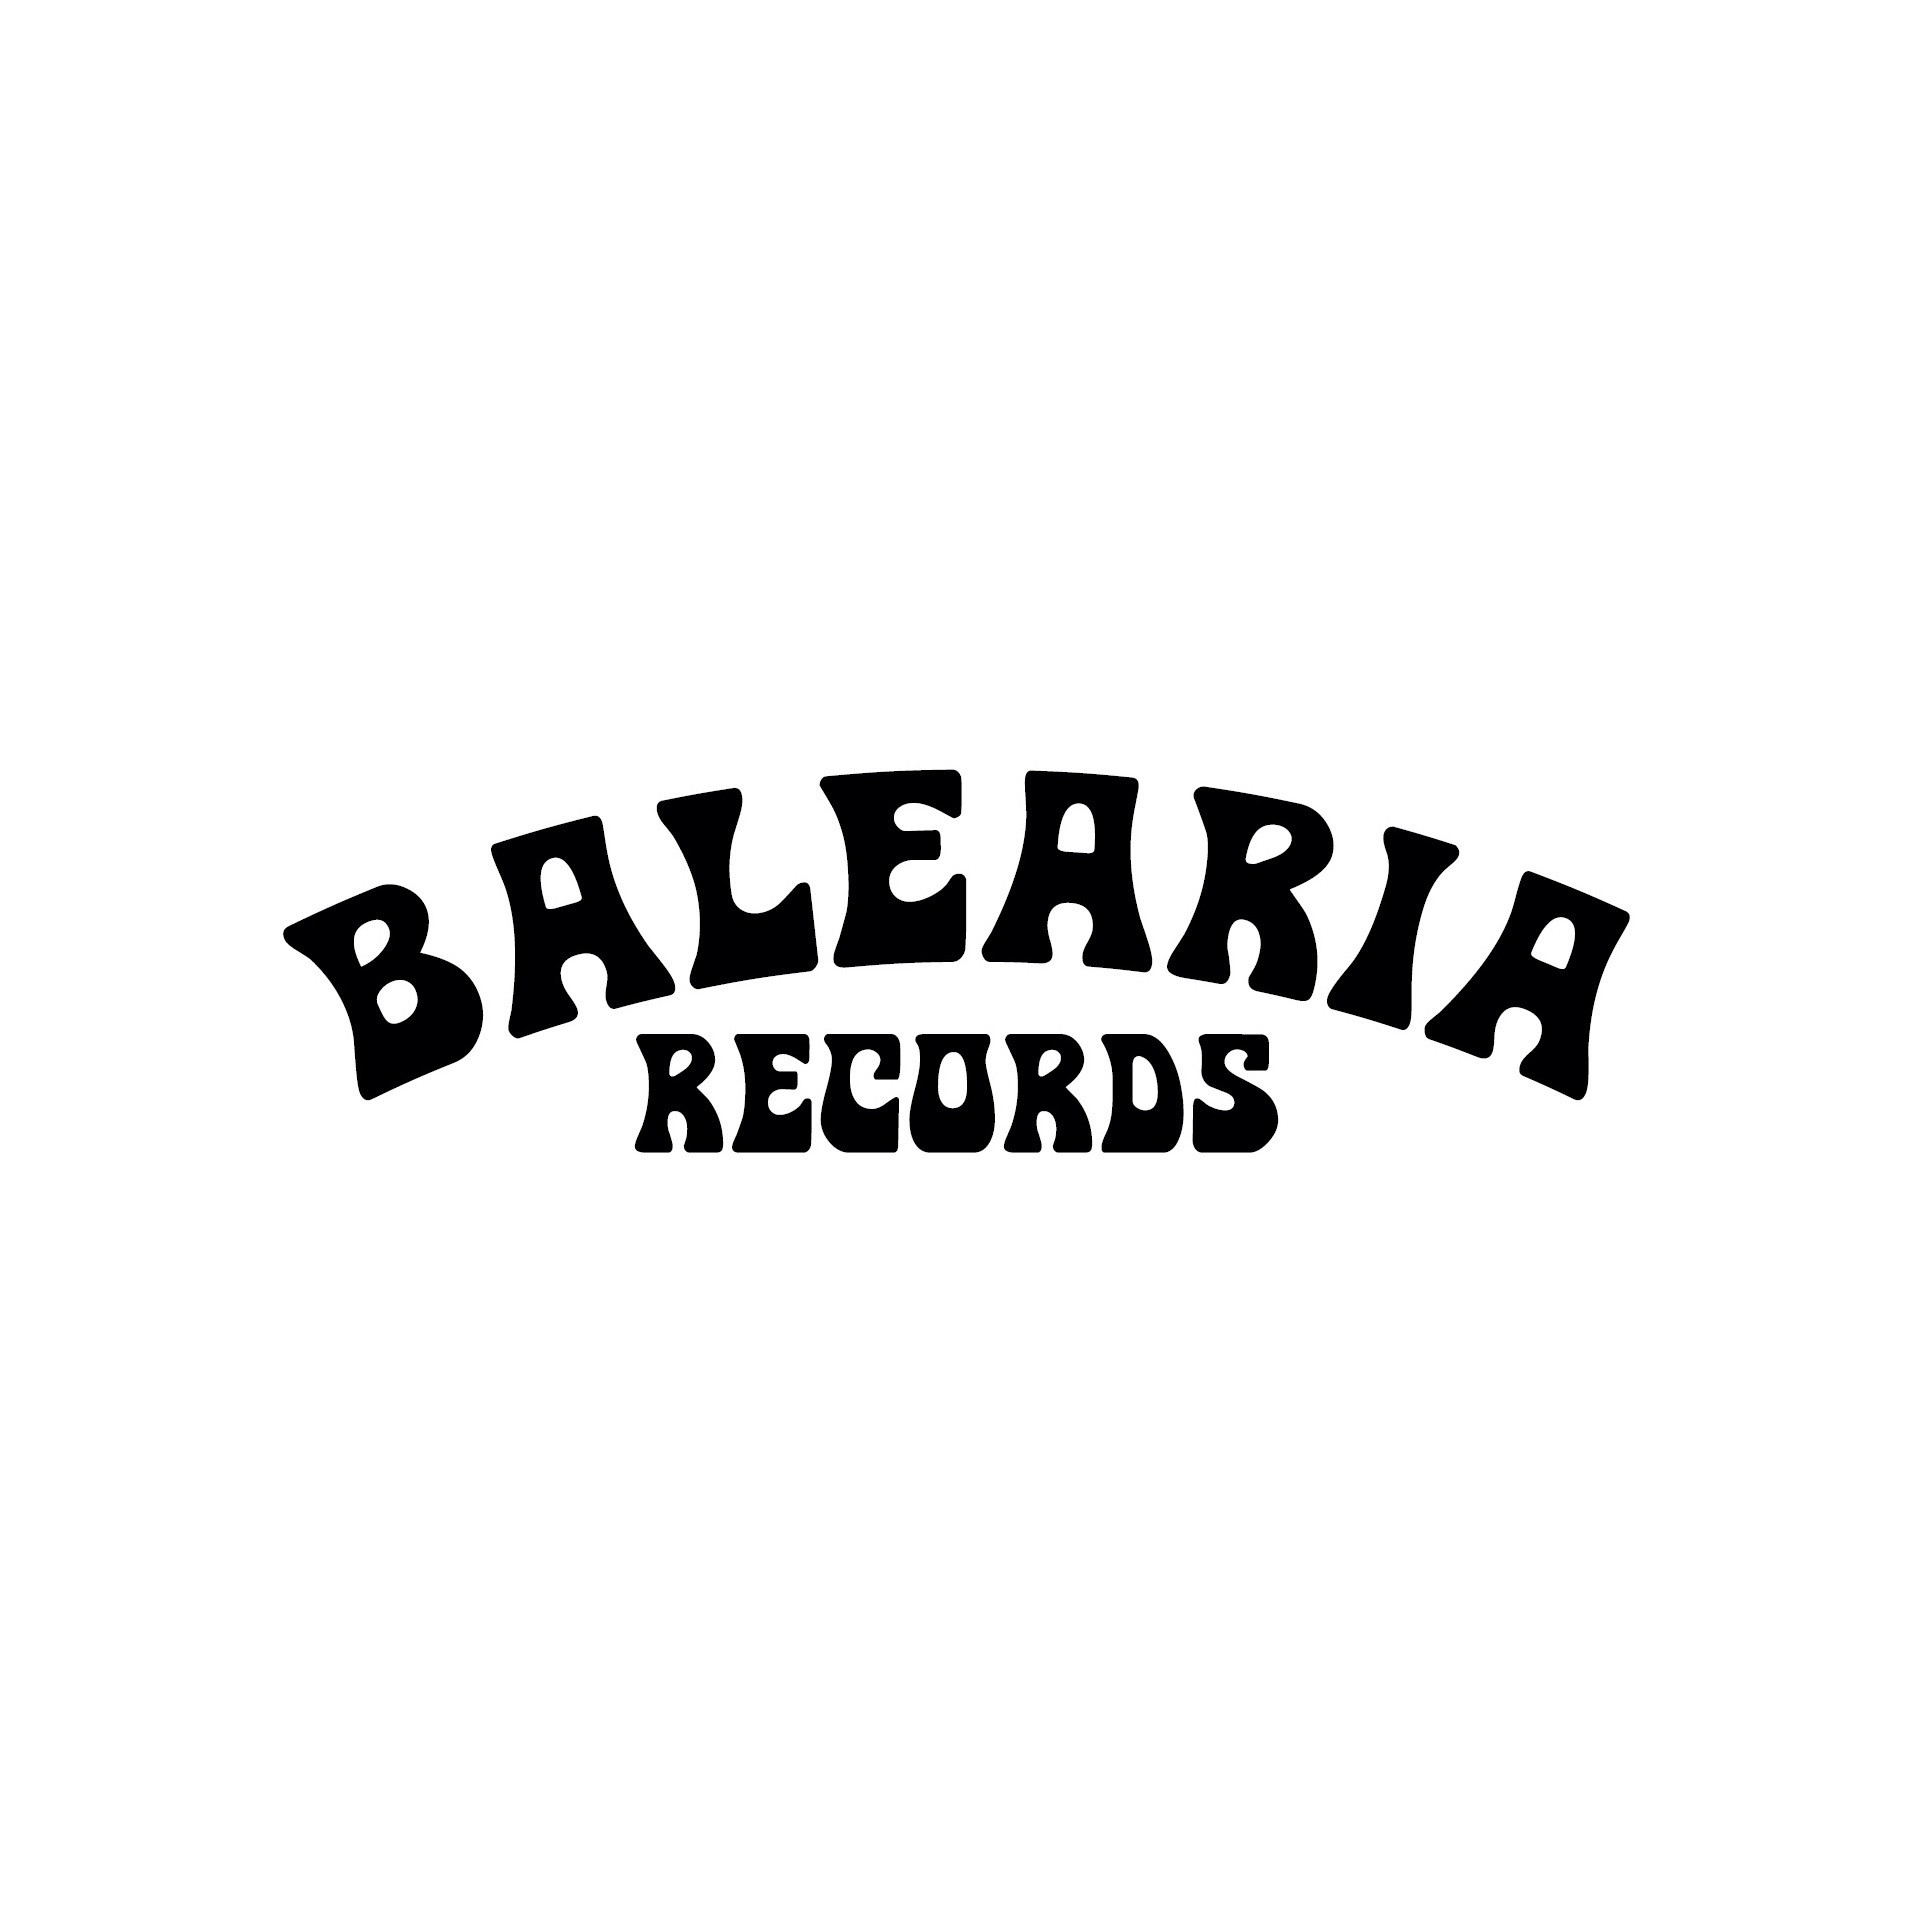 Balearia Records